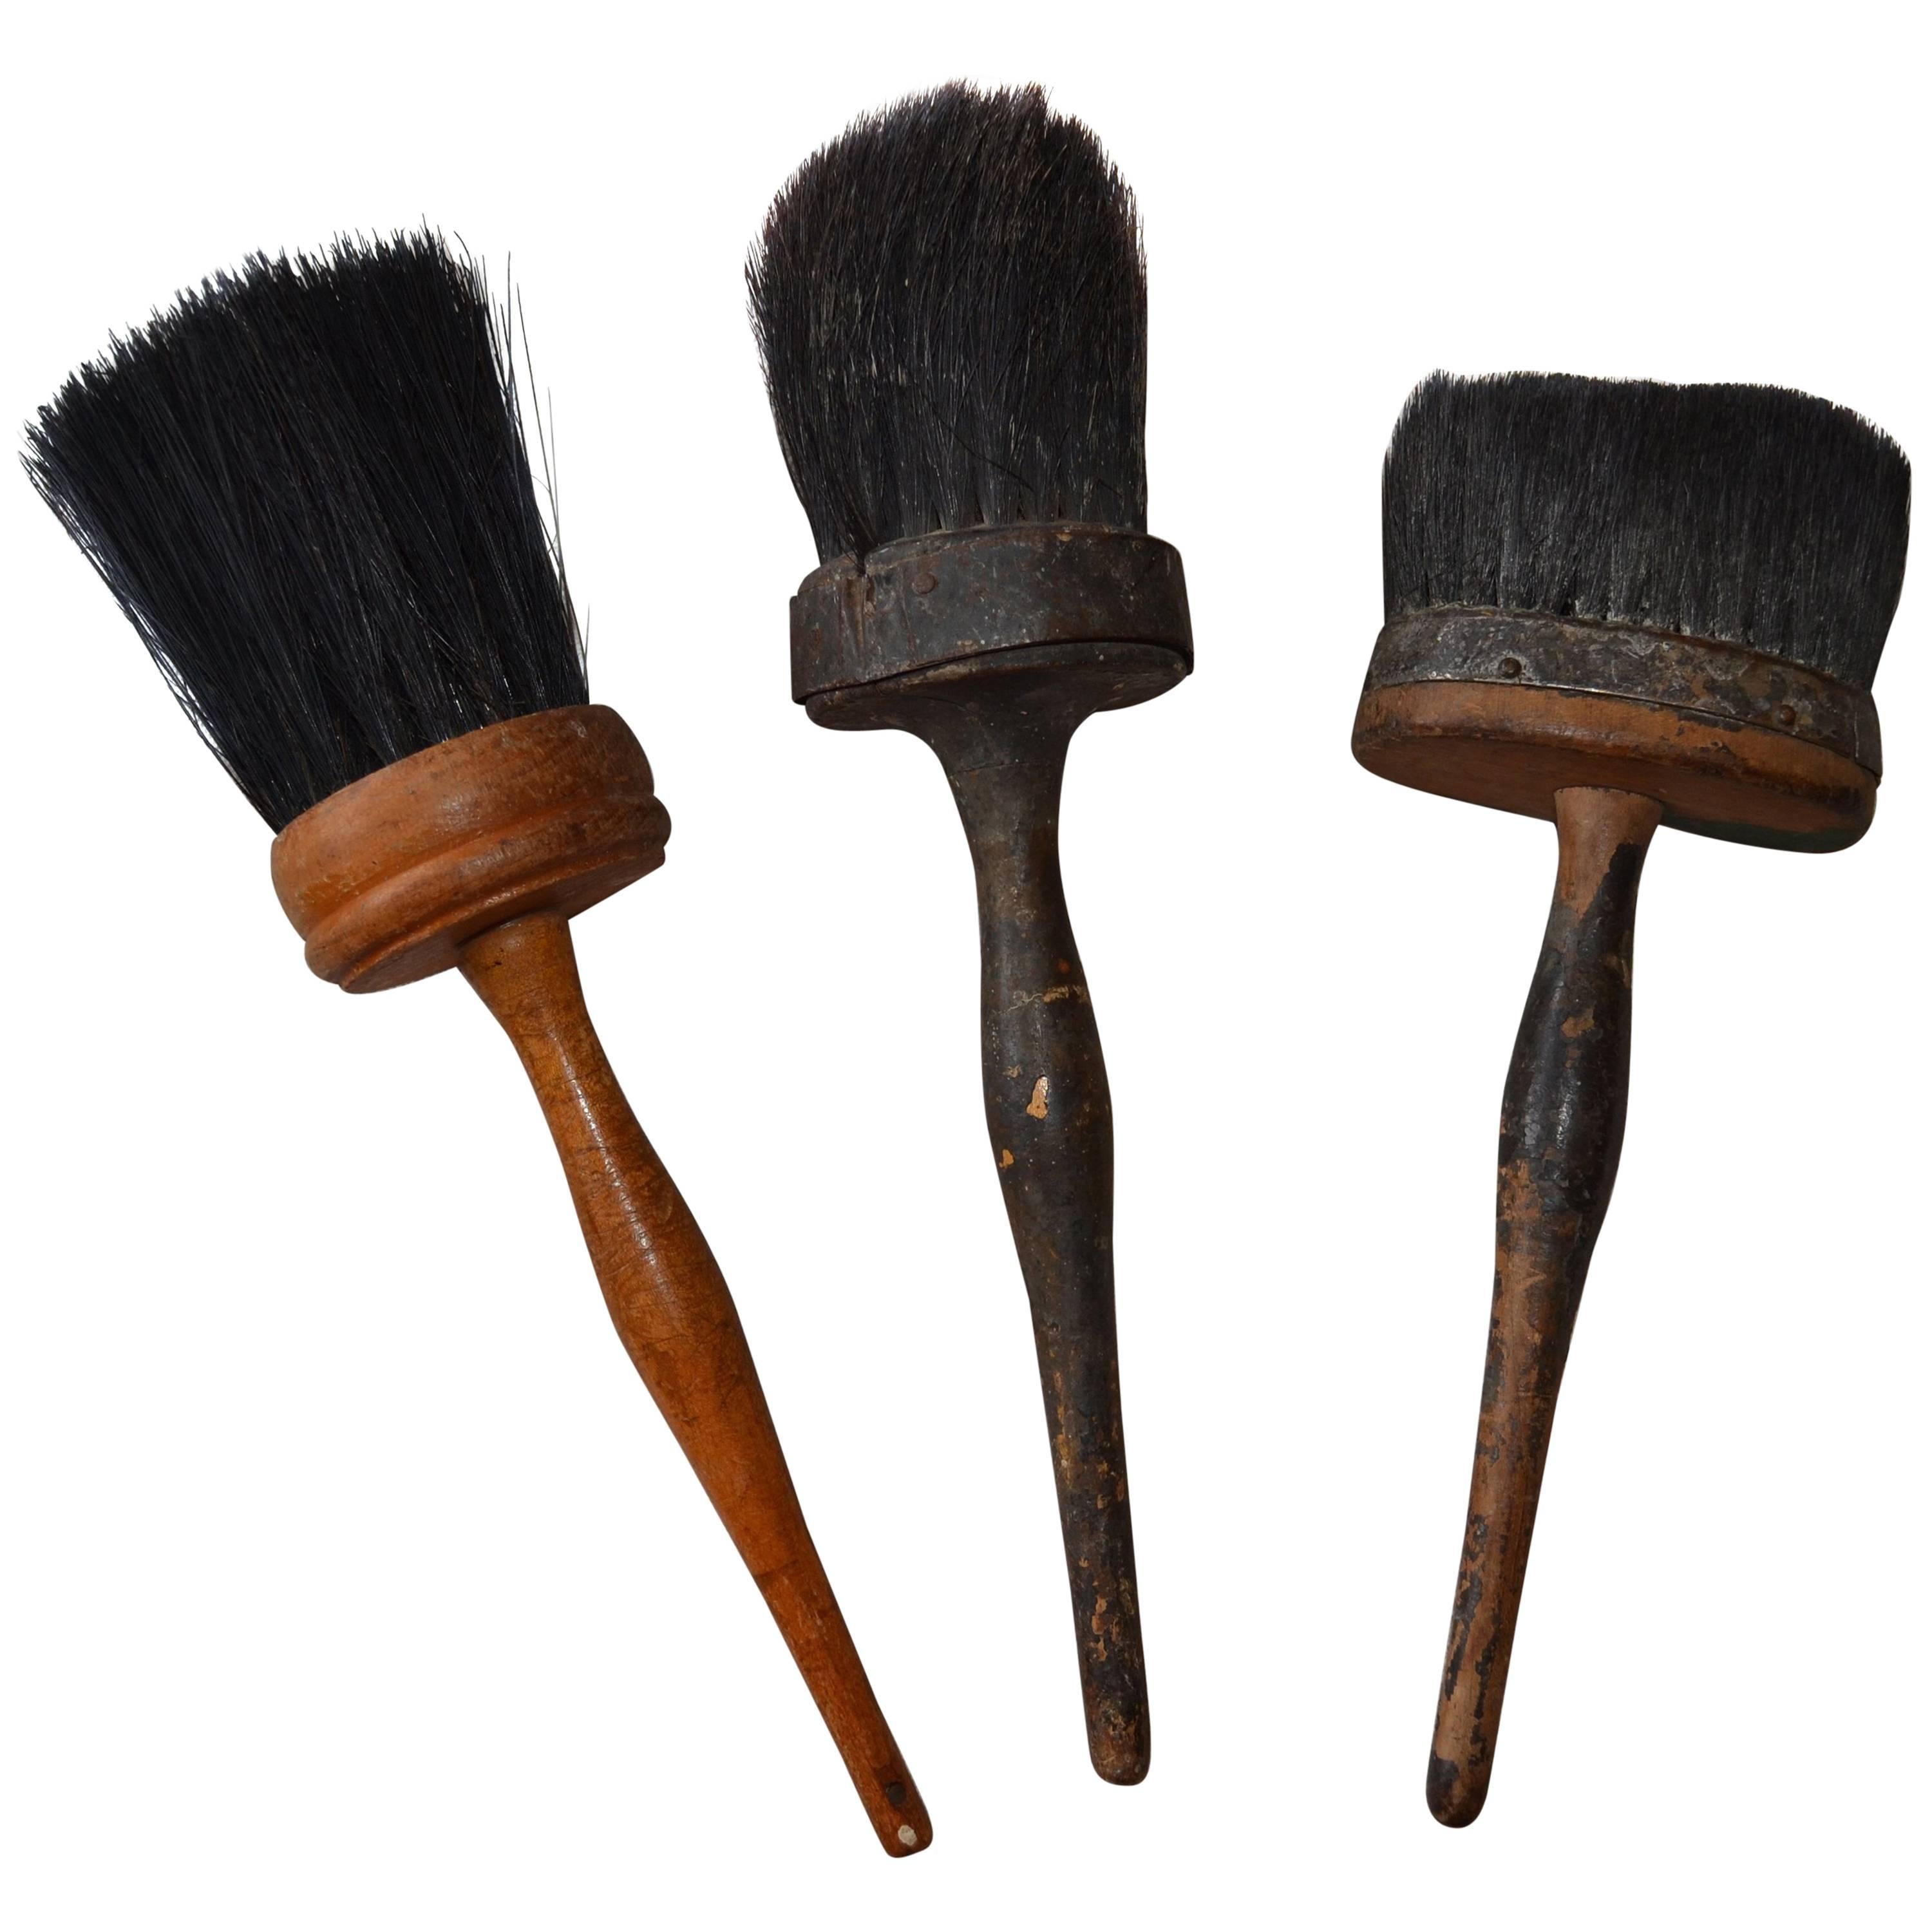 Trio of Largish Vintage Brushes For Sale